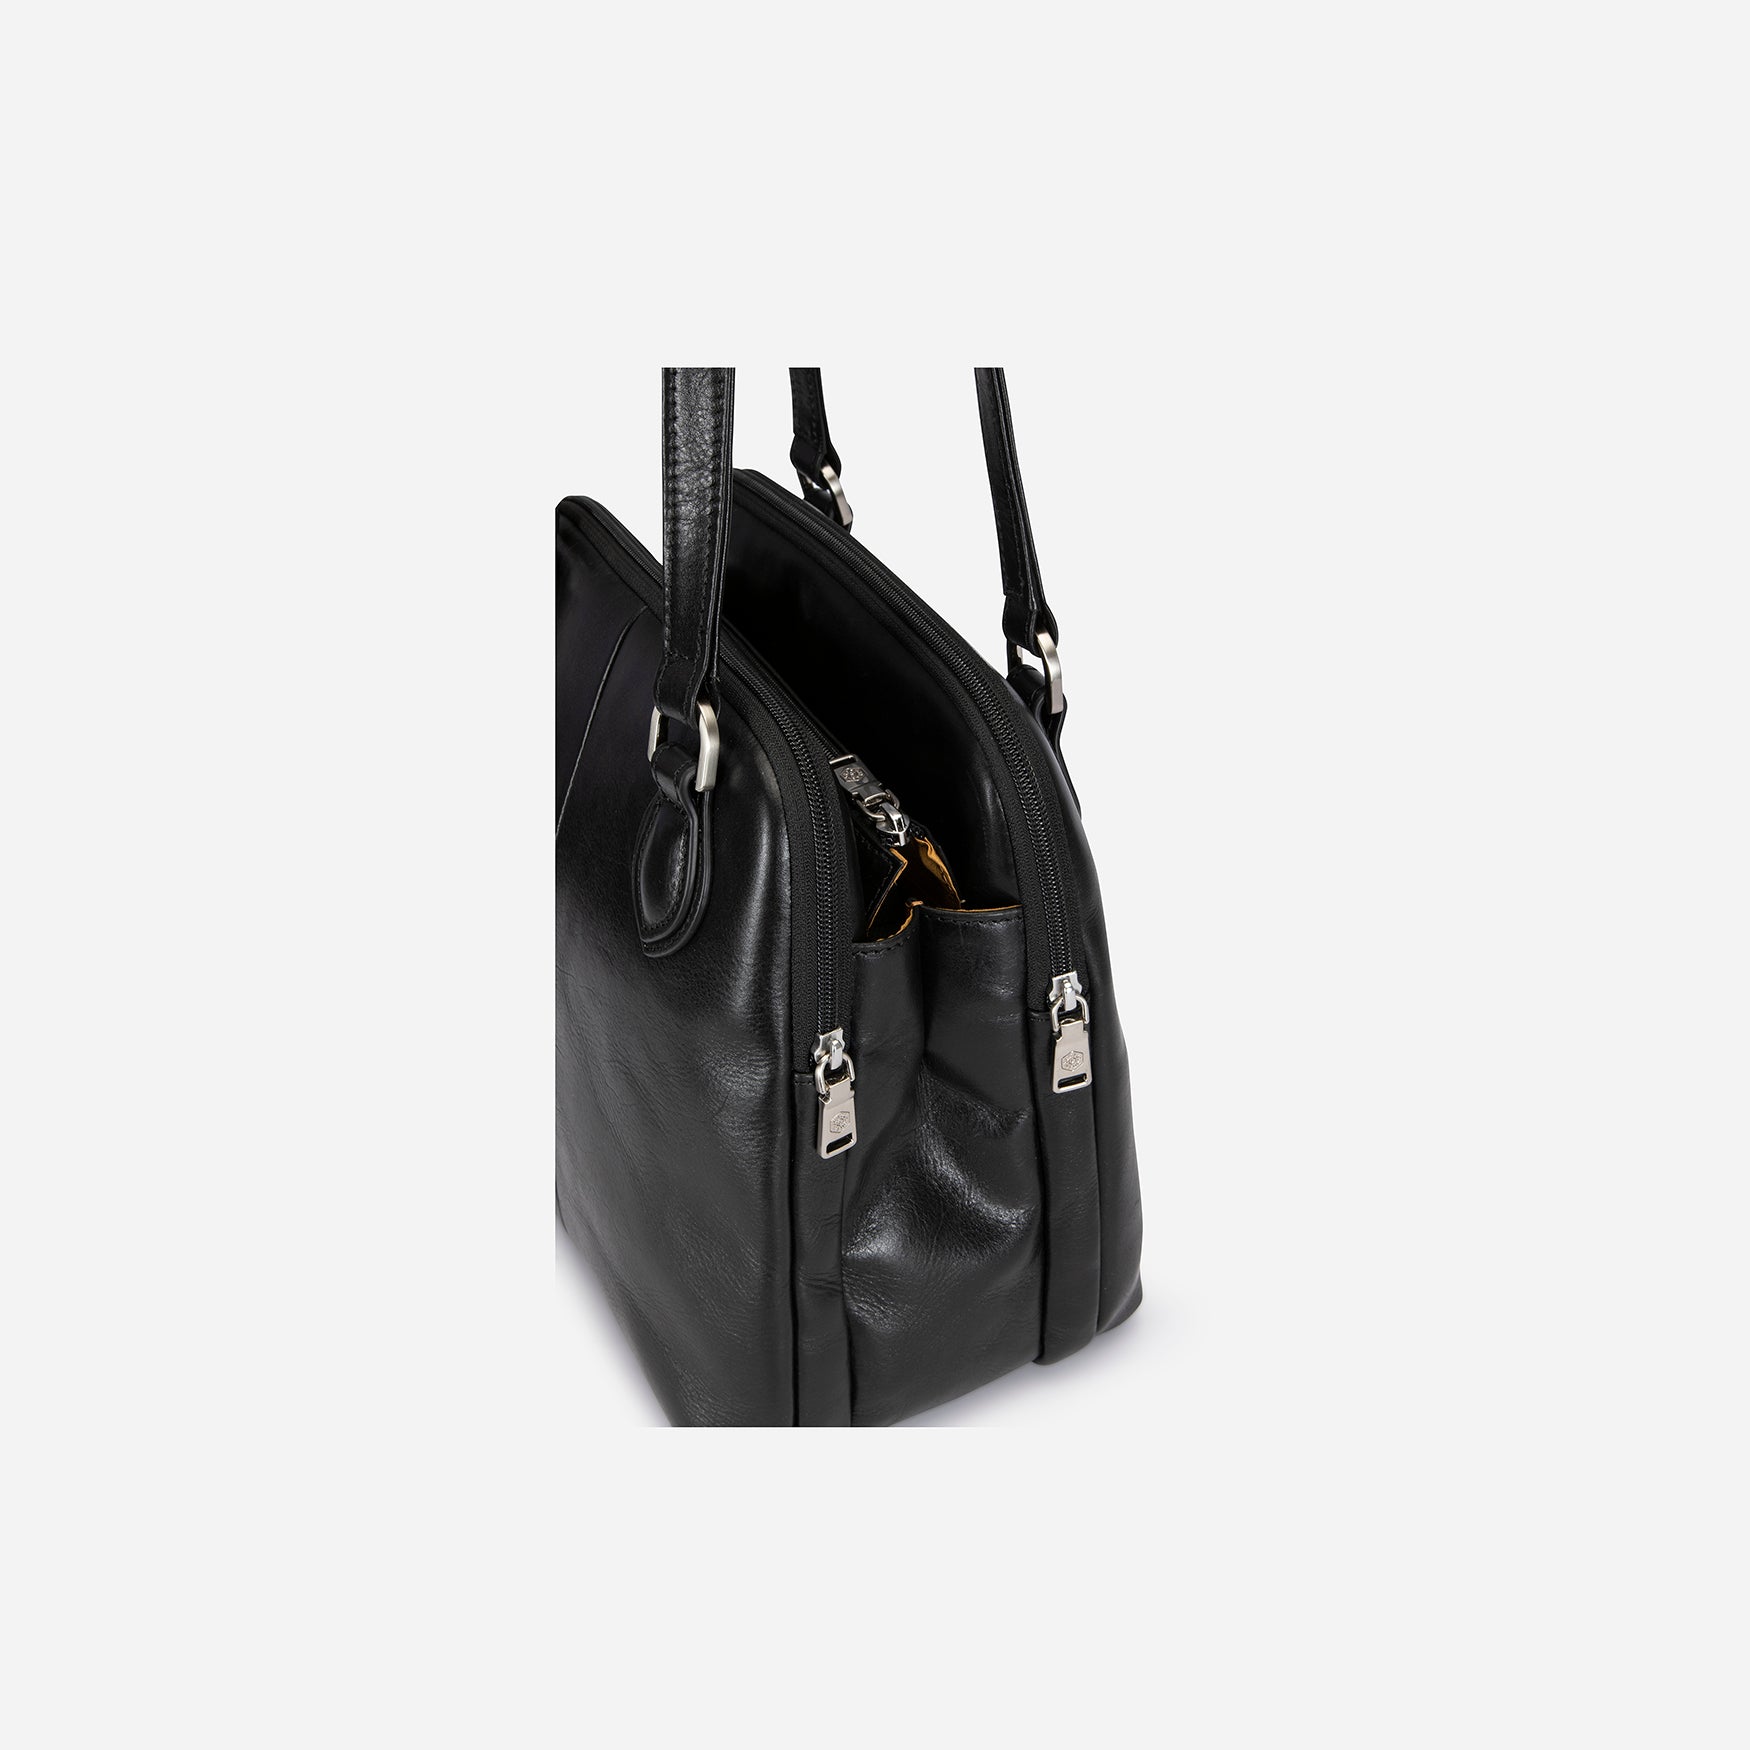 Oxford Compact Ladies Handbag, Black